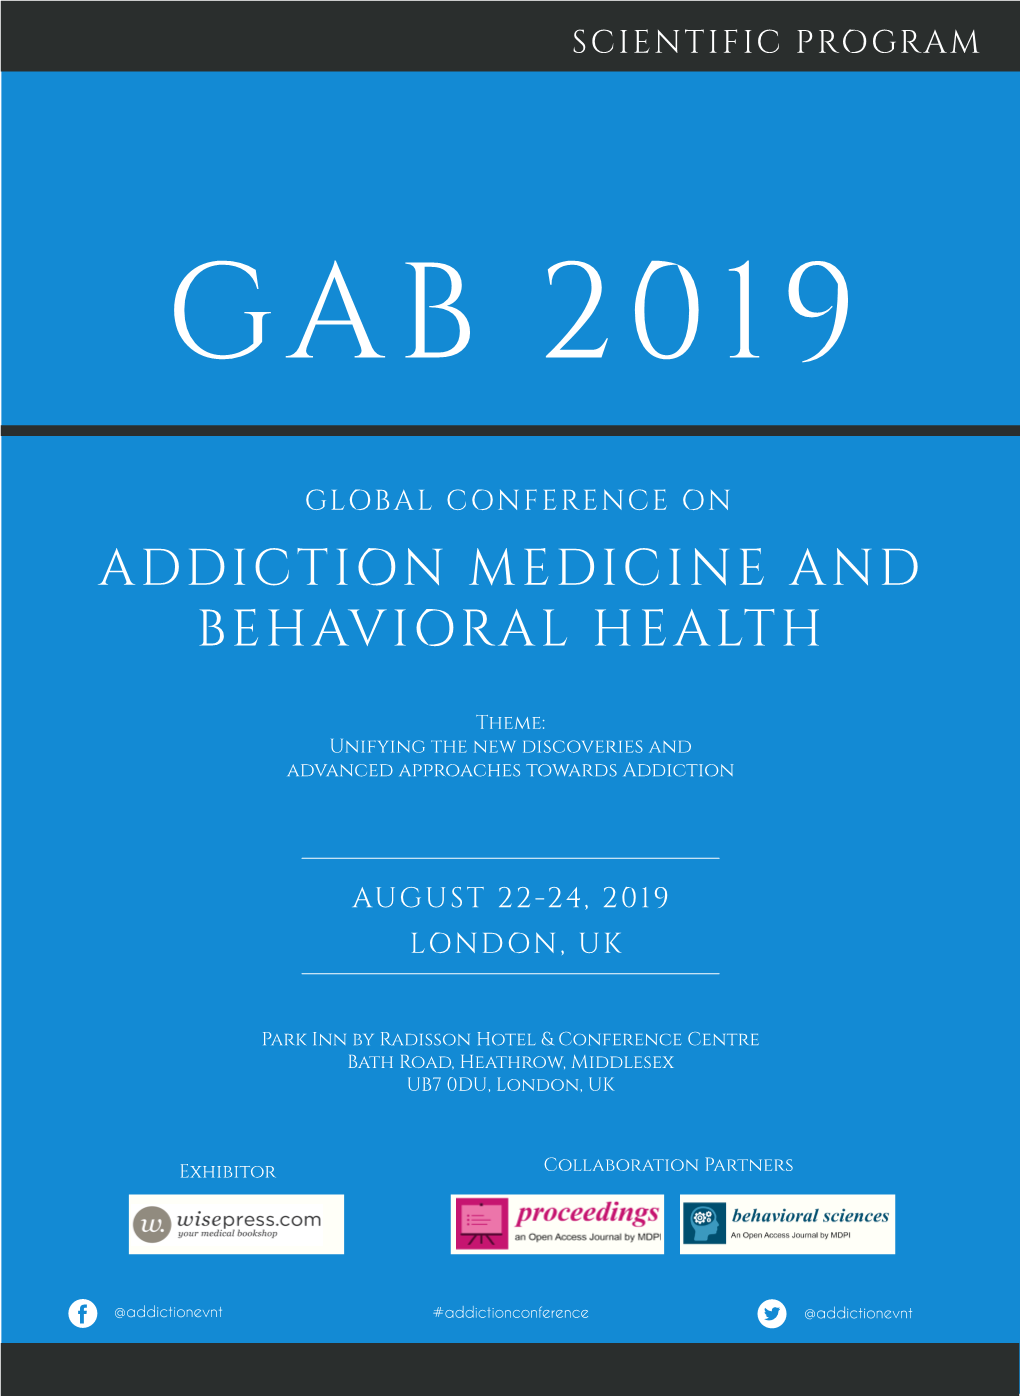 Addiction Medicine and Behavioral Health